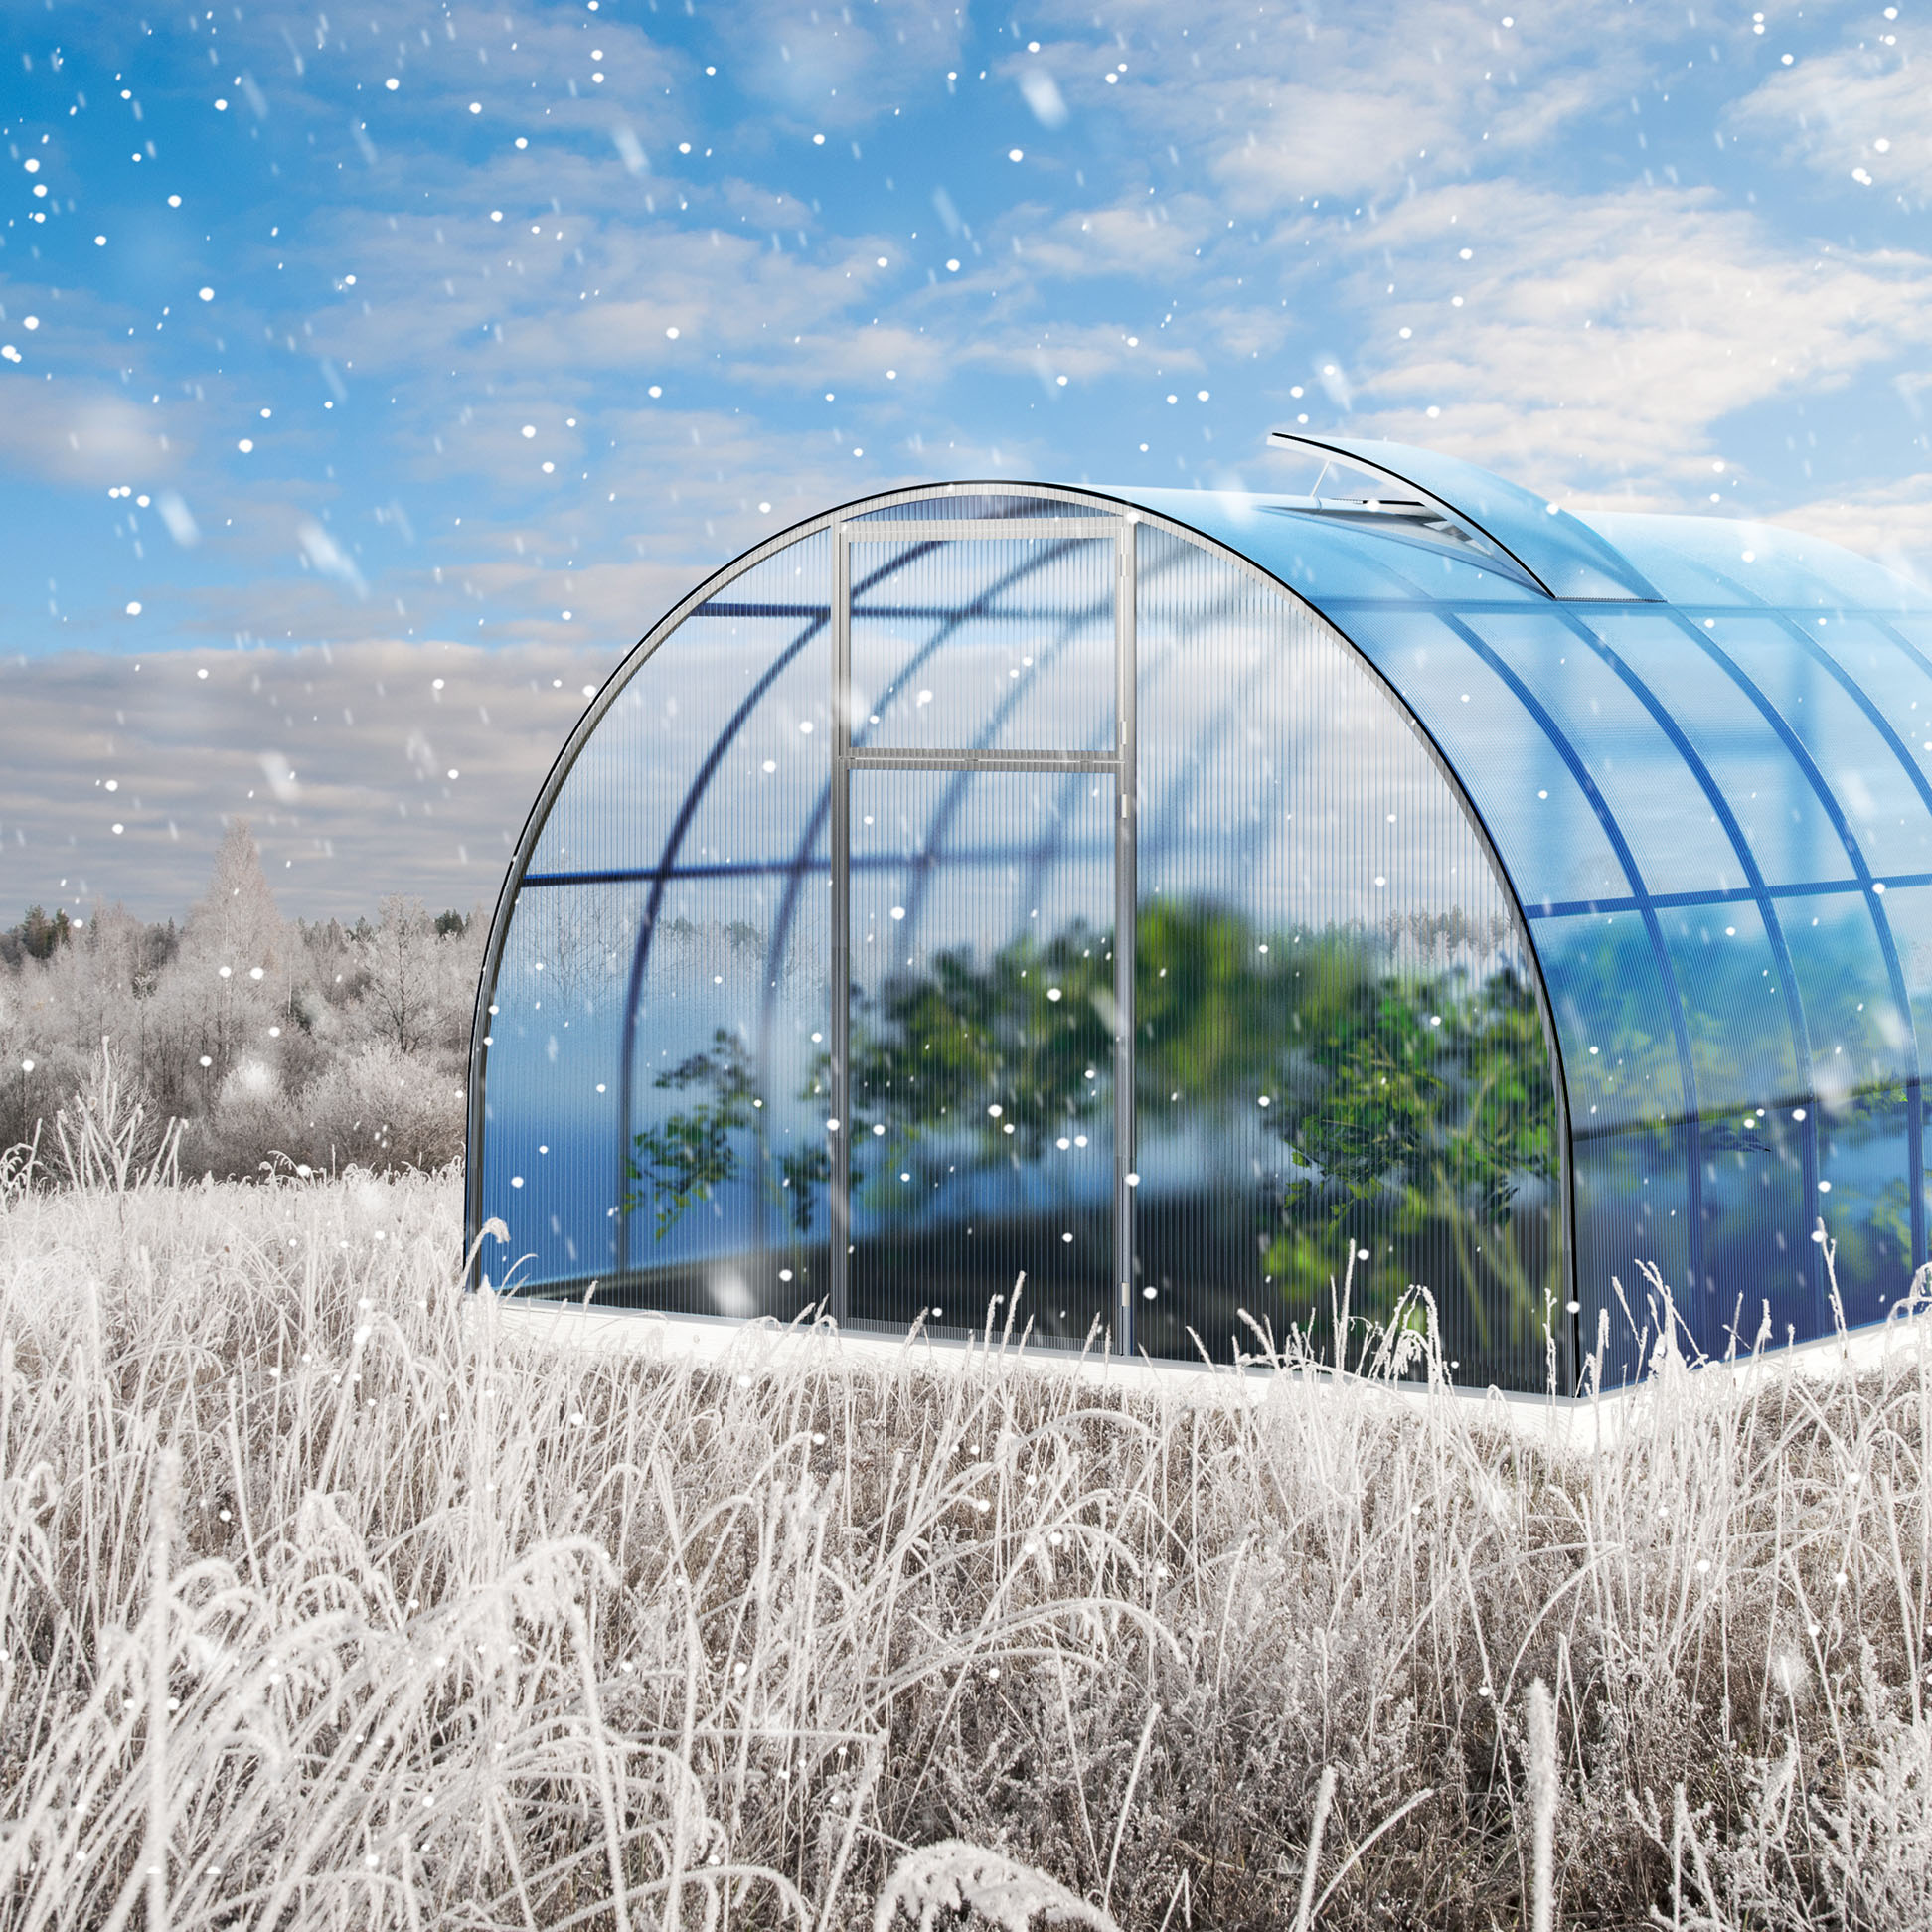 winter greenhouse for gardening